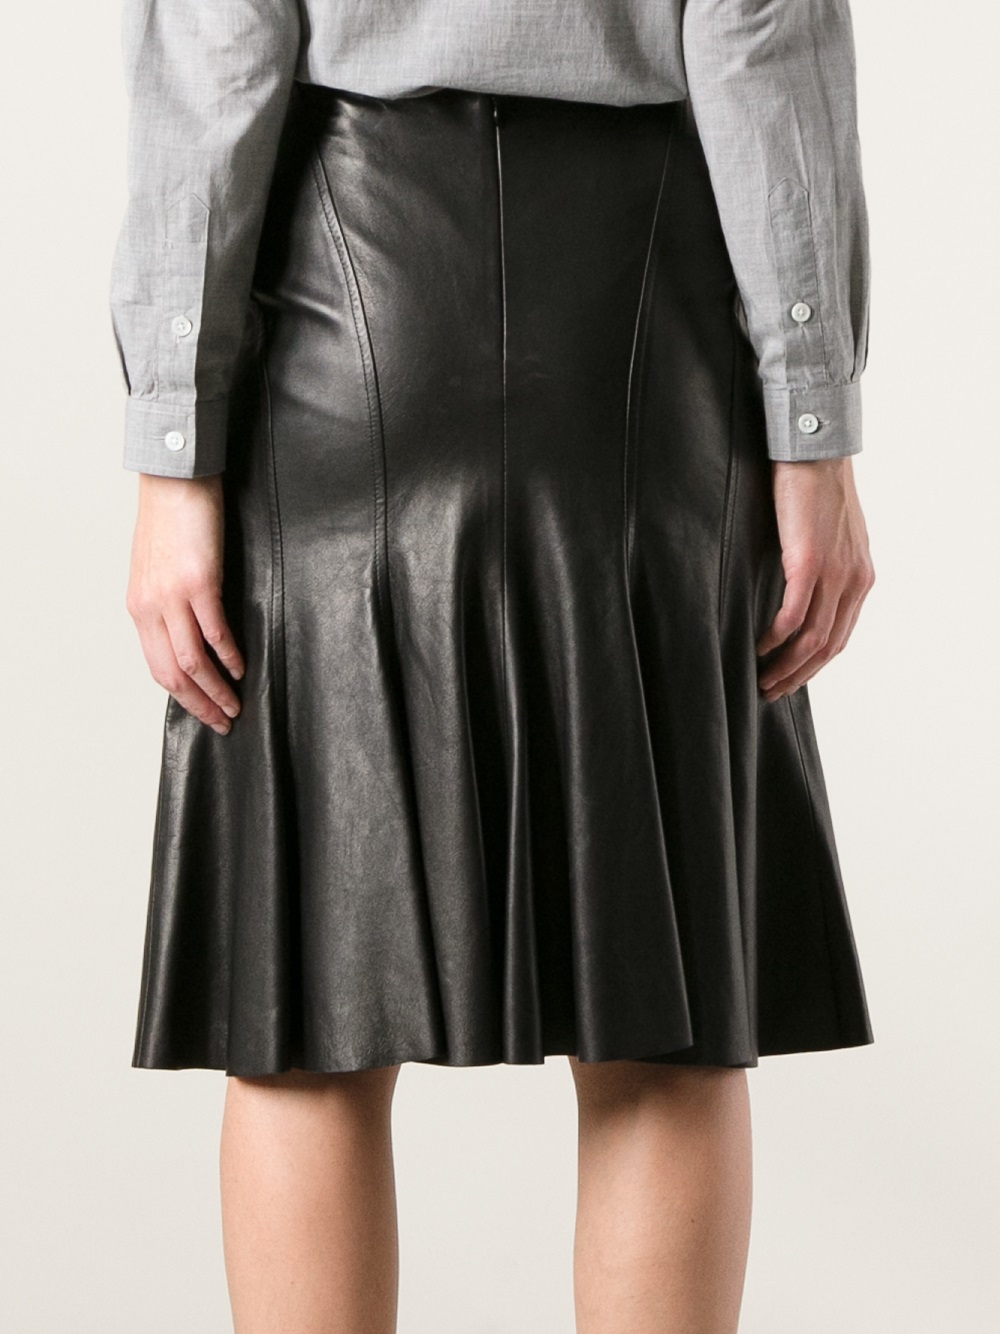 Lyst - Ralph Lauren Black Label Pleated Leather Skirt in Black